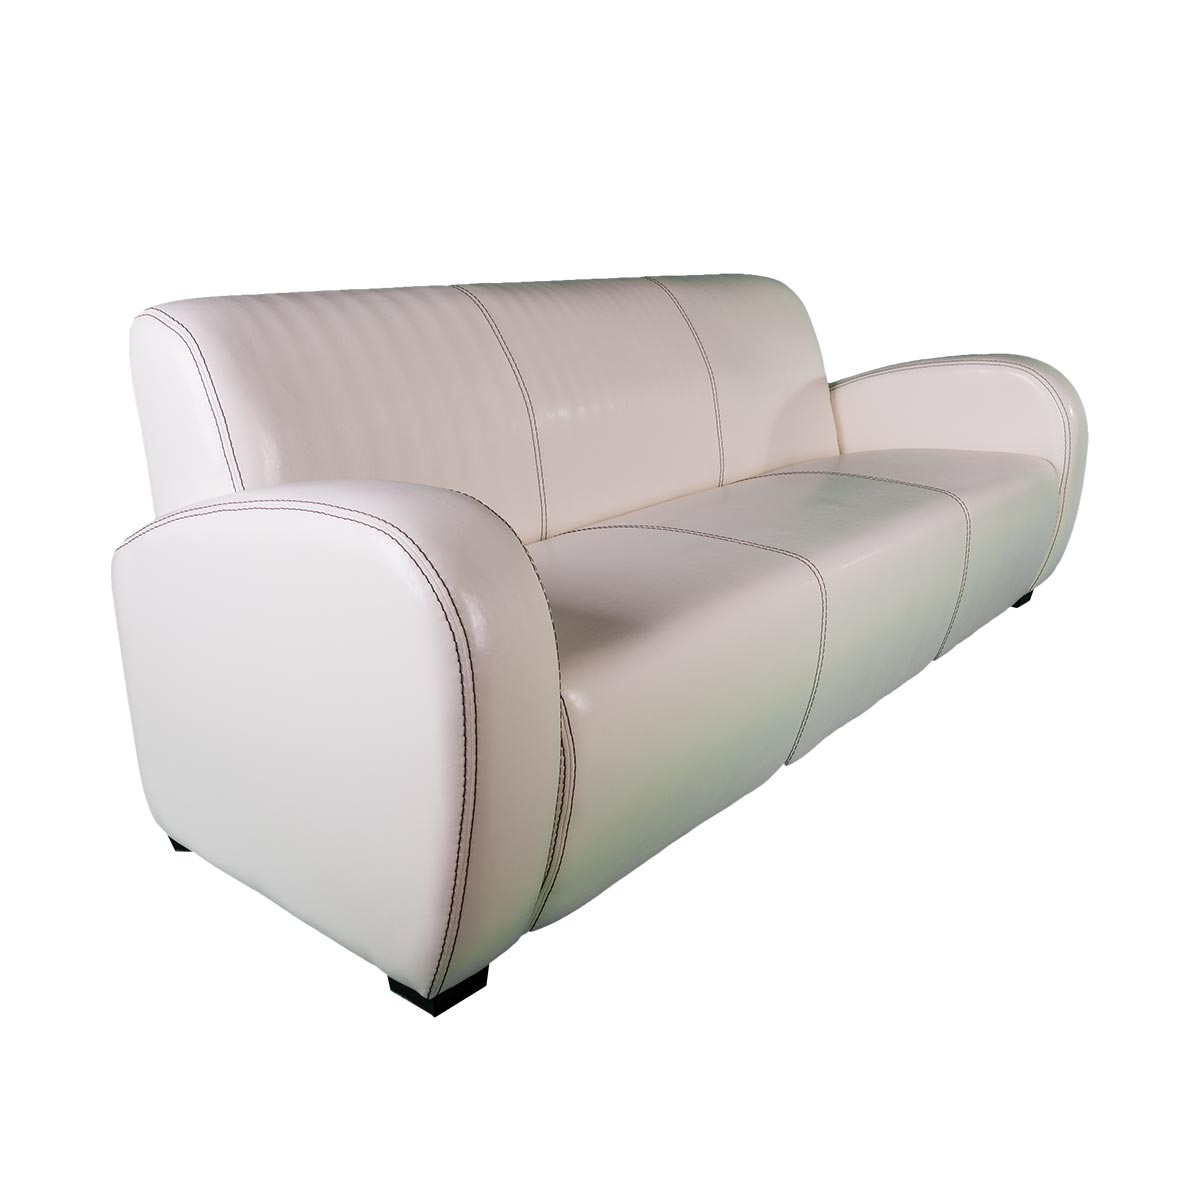 sofe-4029-roma-3-seating